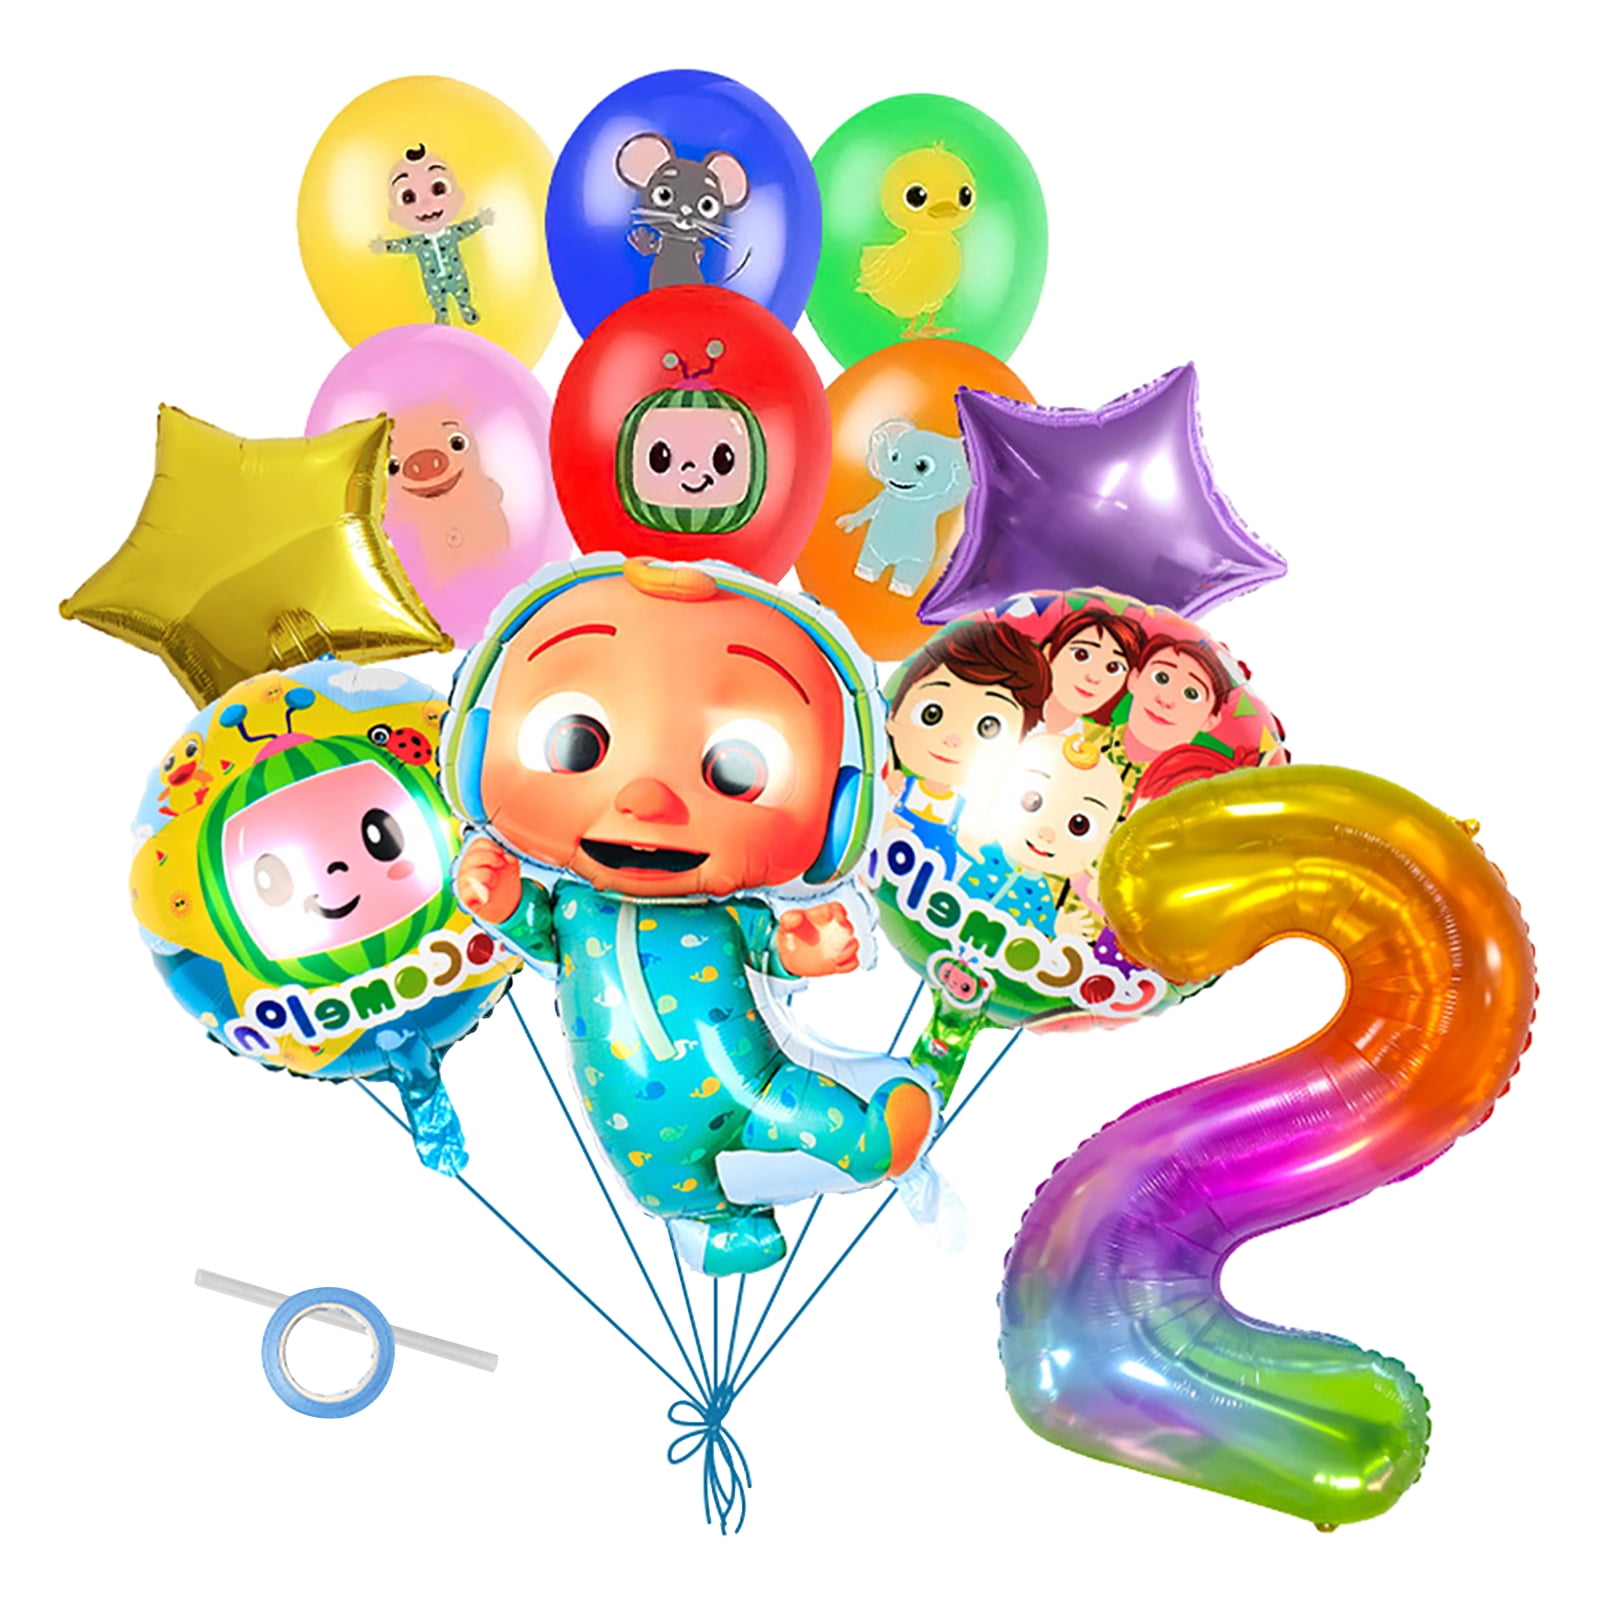 Details about   Dinosaur Aluminum Balloon Multicolor Novelty Foil Balloon Child Party Room Decor 